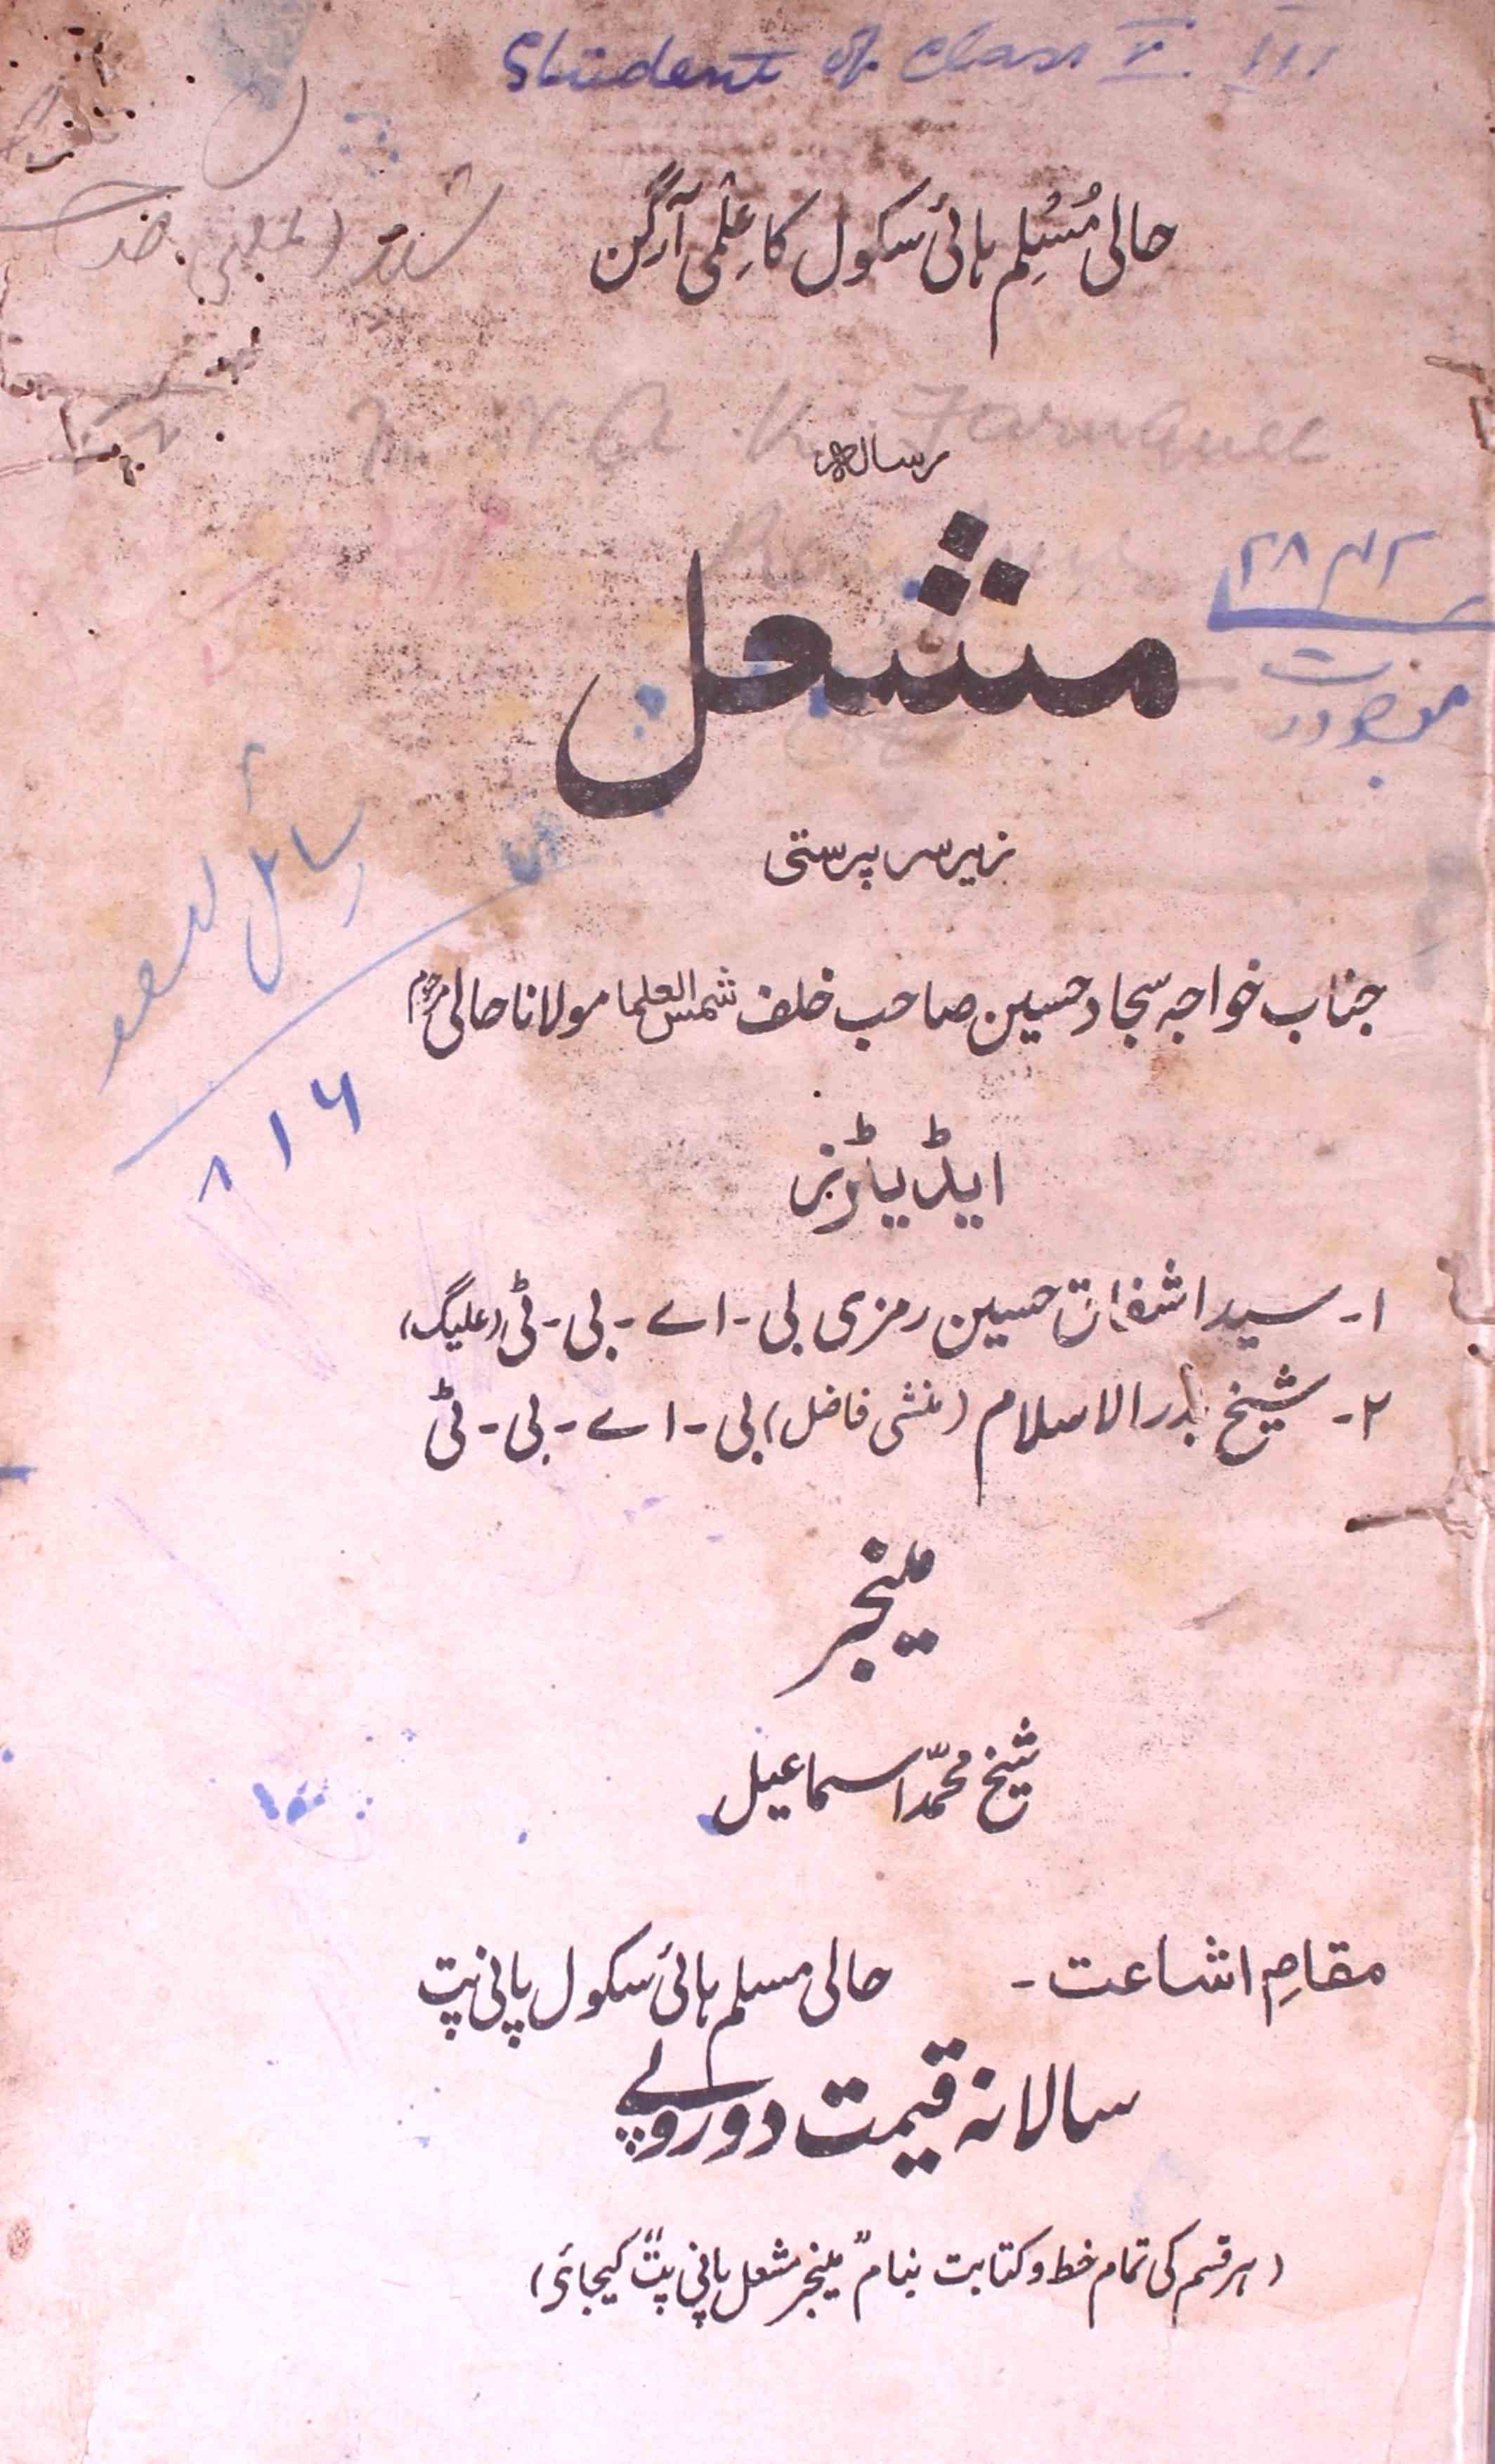 Mashal Jild 1 No. 1 April 1927